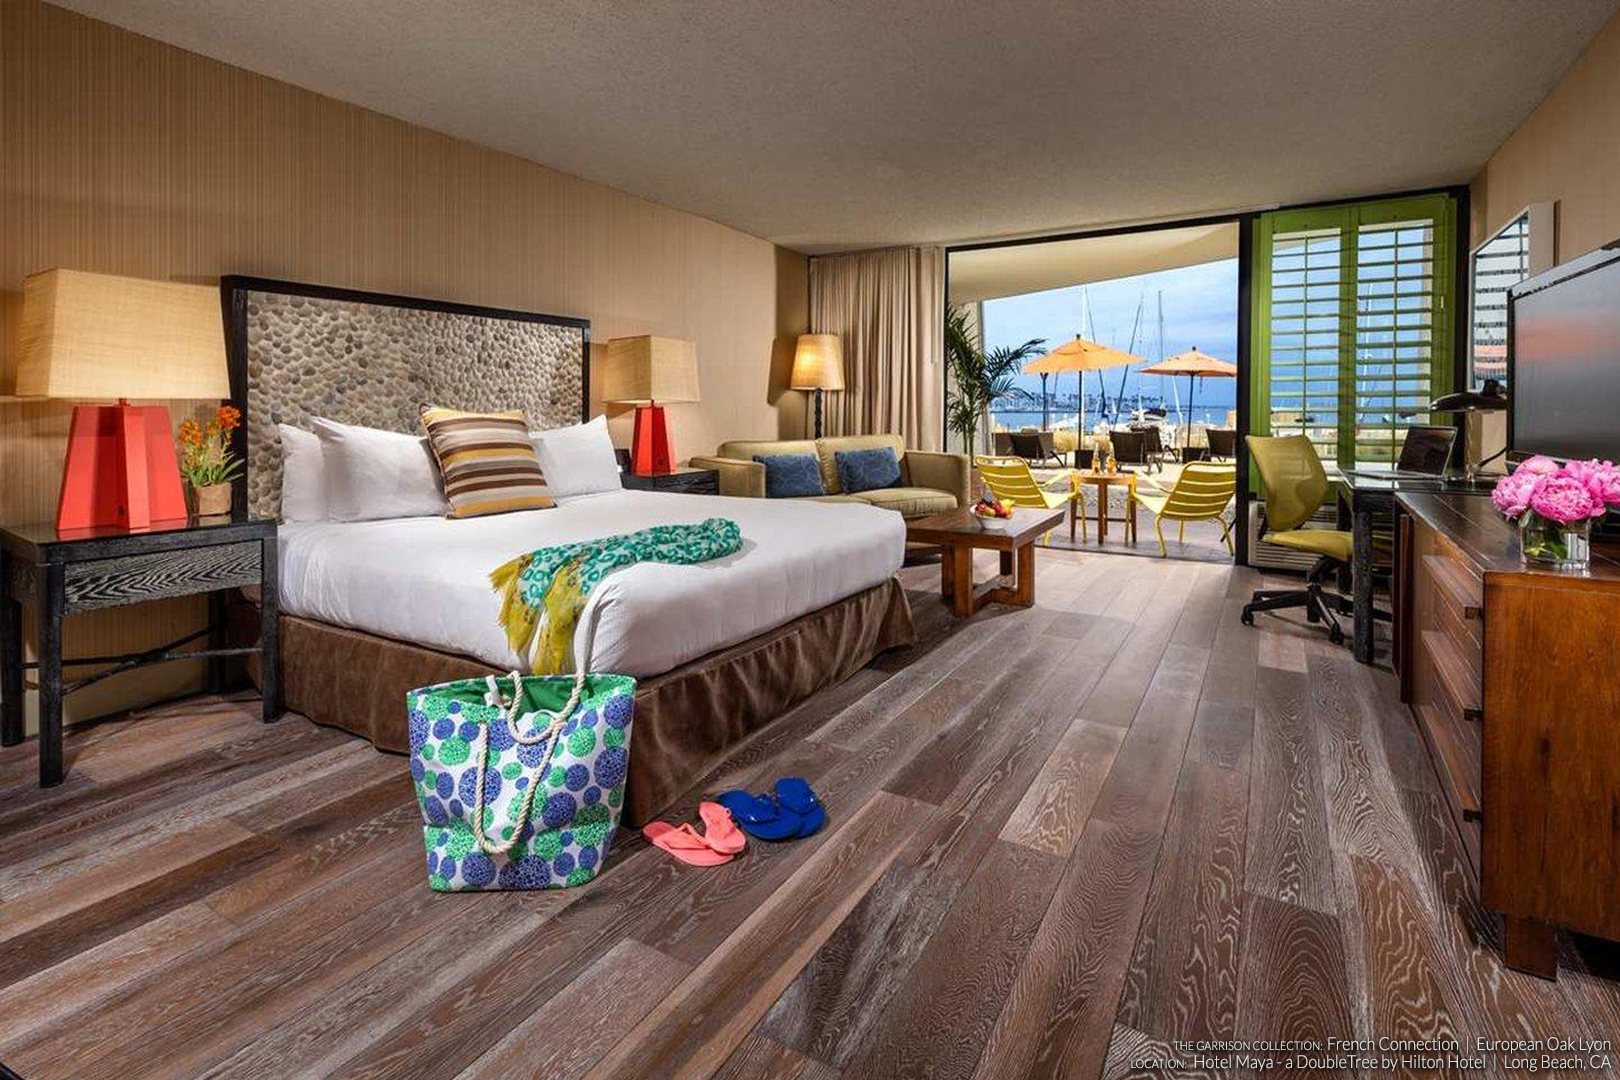 Hotel Maya in Long Beach, CA - Featuring French Conncection Lyon European White Oak Flooring